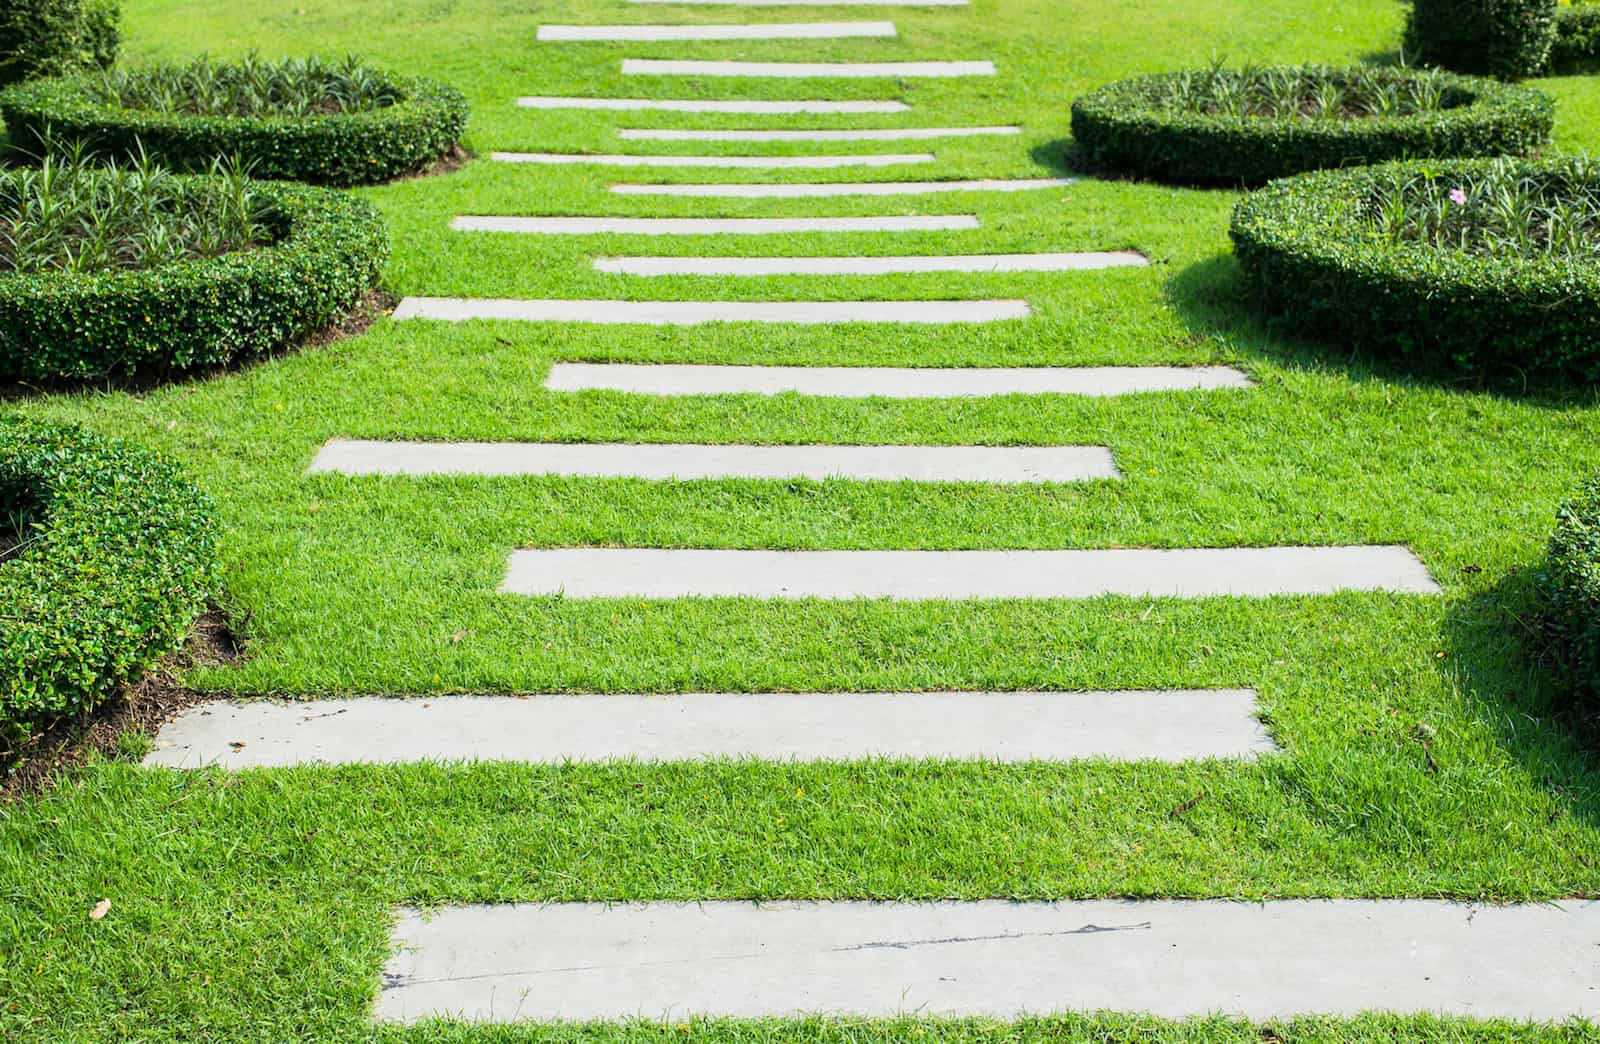 contemporary stepping stones garden path ideas image